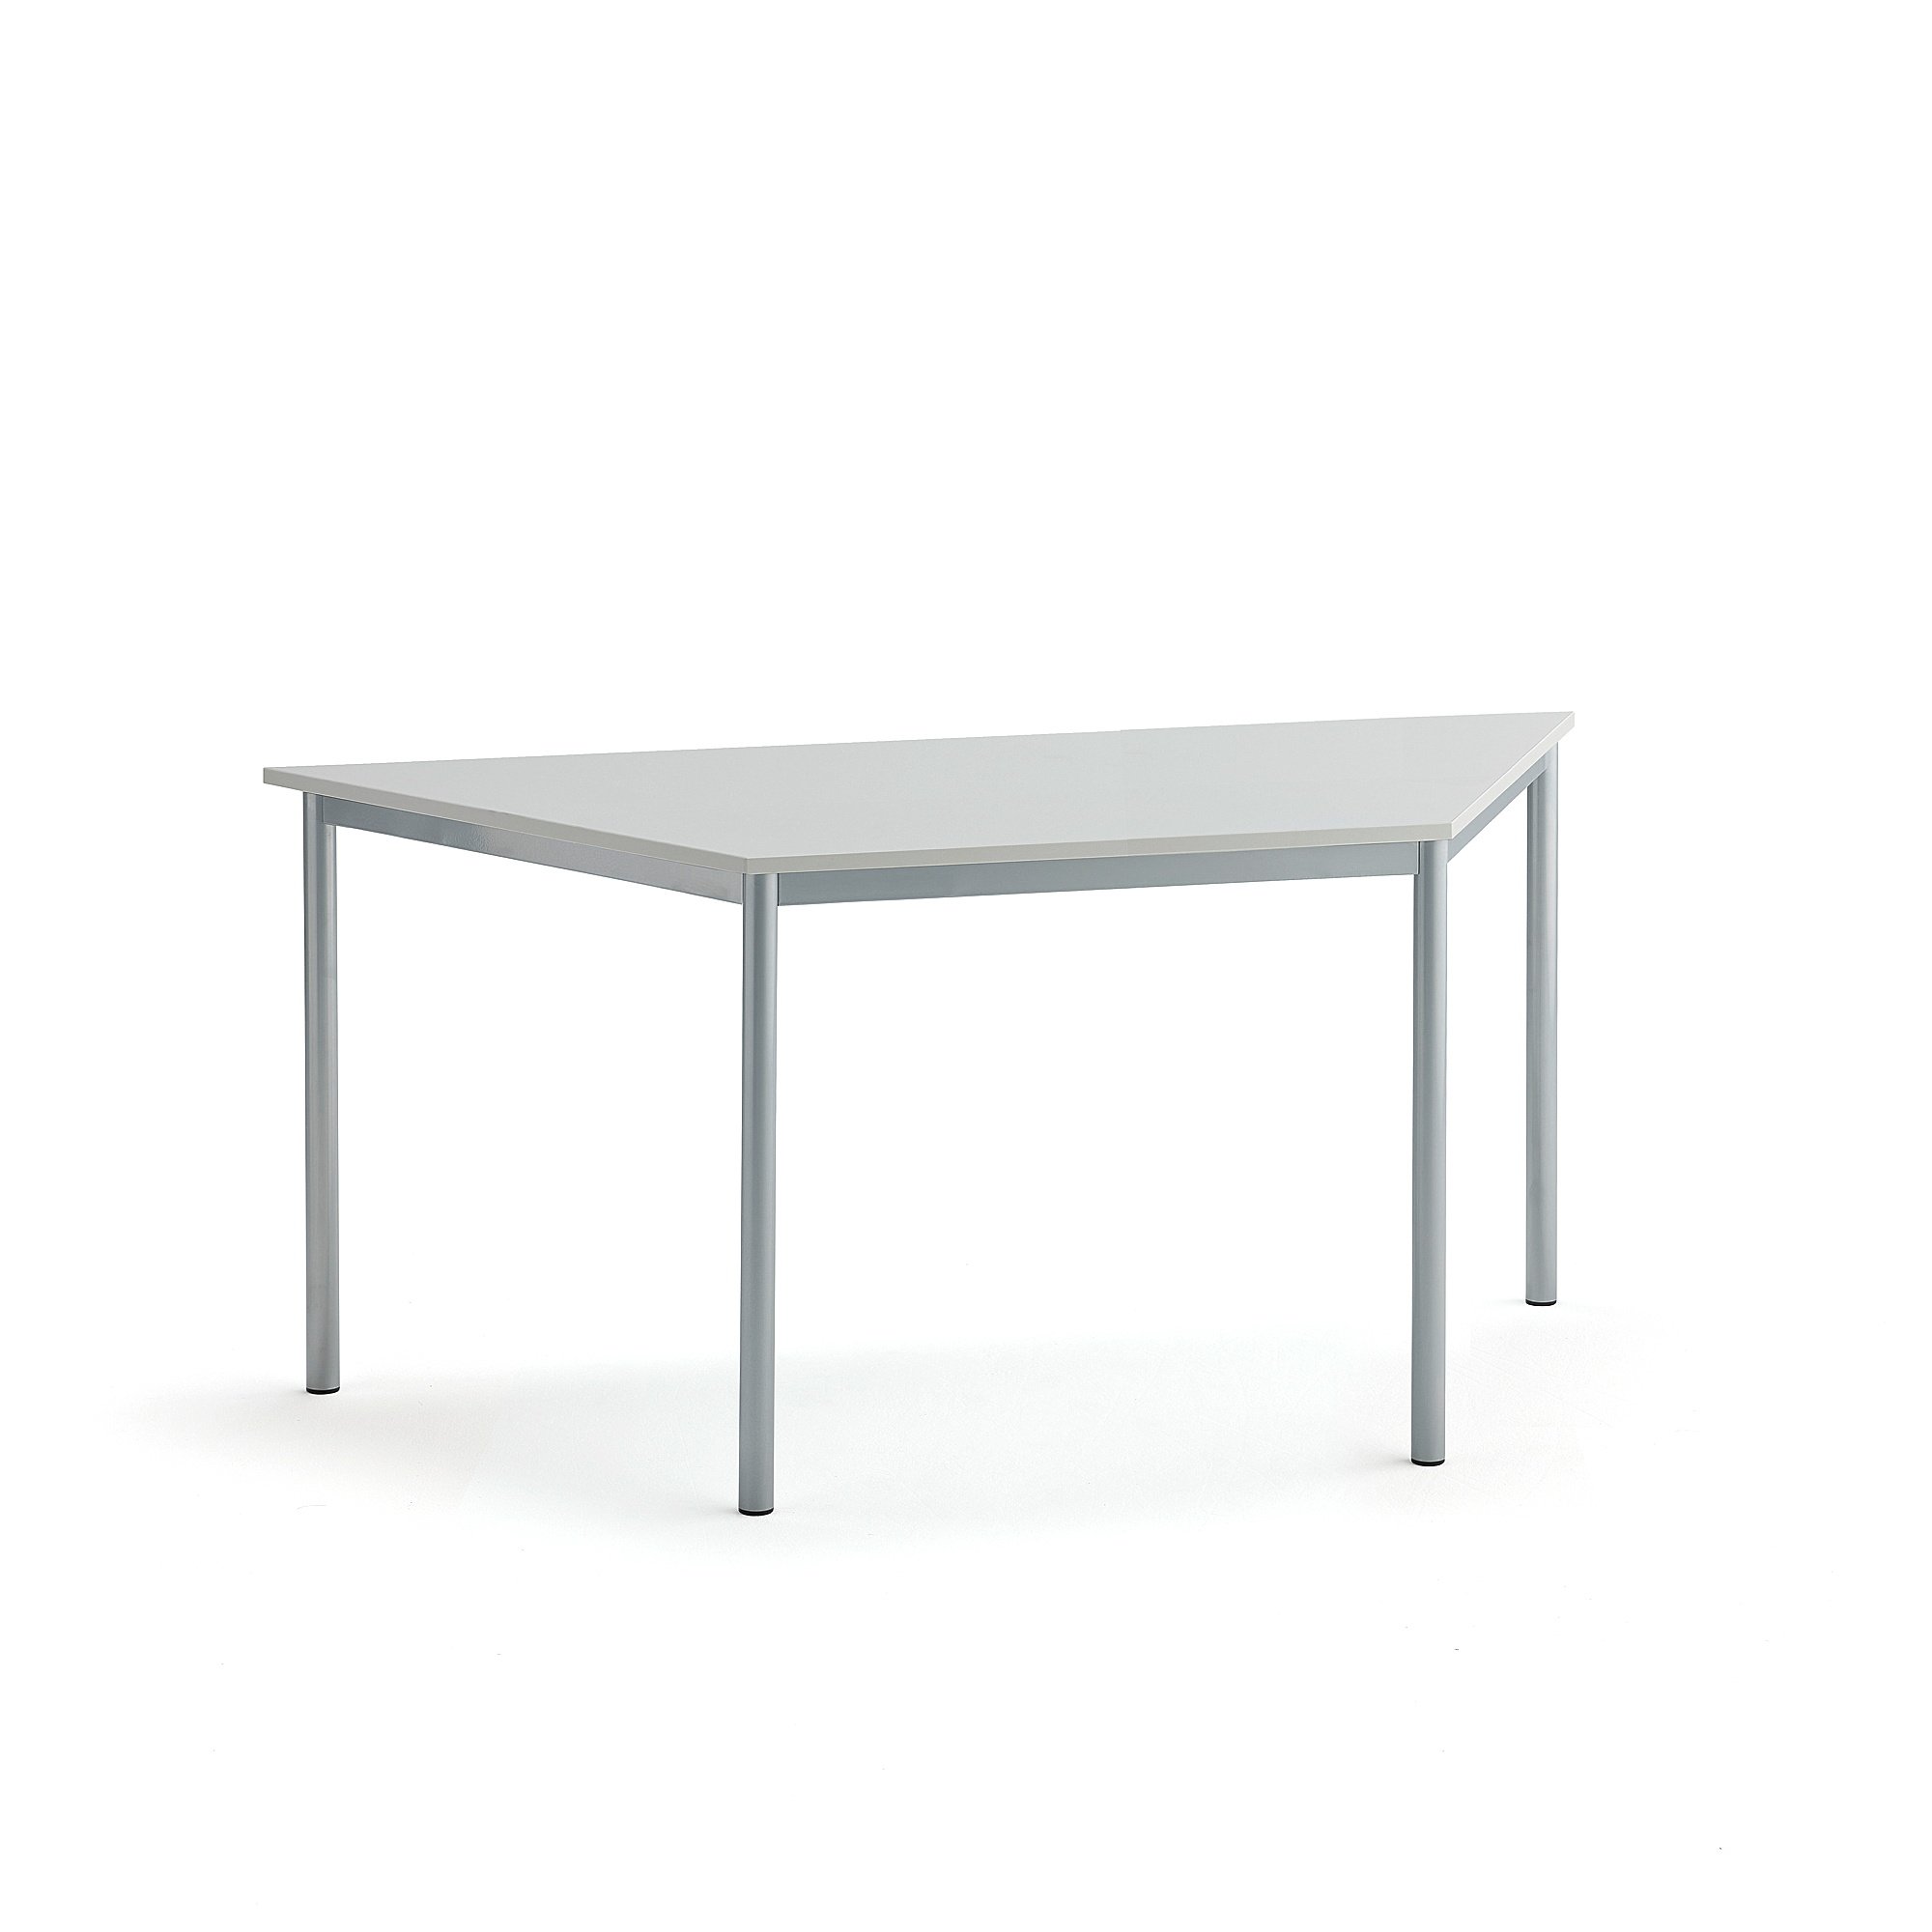 Stôl SONITUS TRAPETS, 1600x800x720 mm, HPL - šedá, strieborná